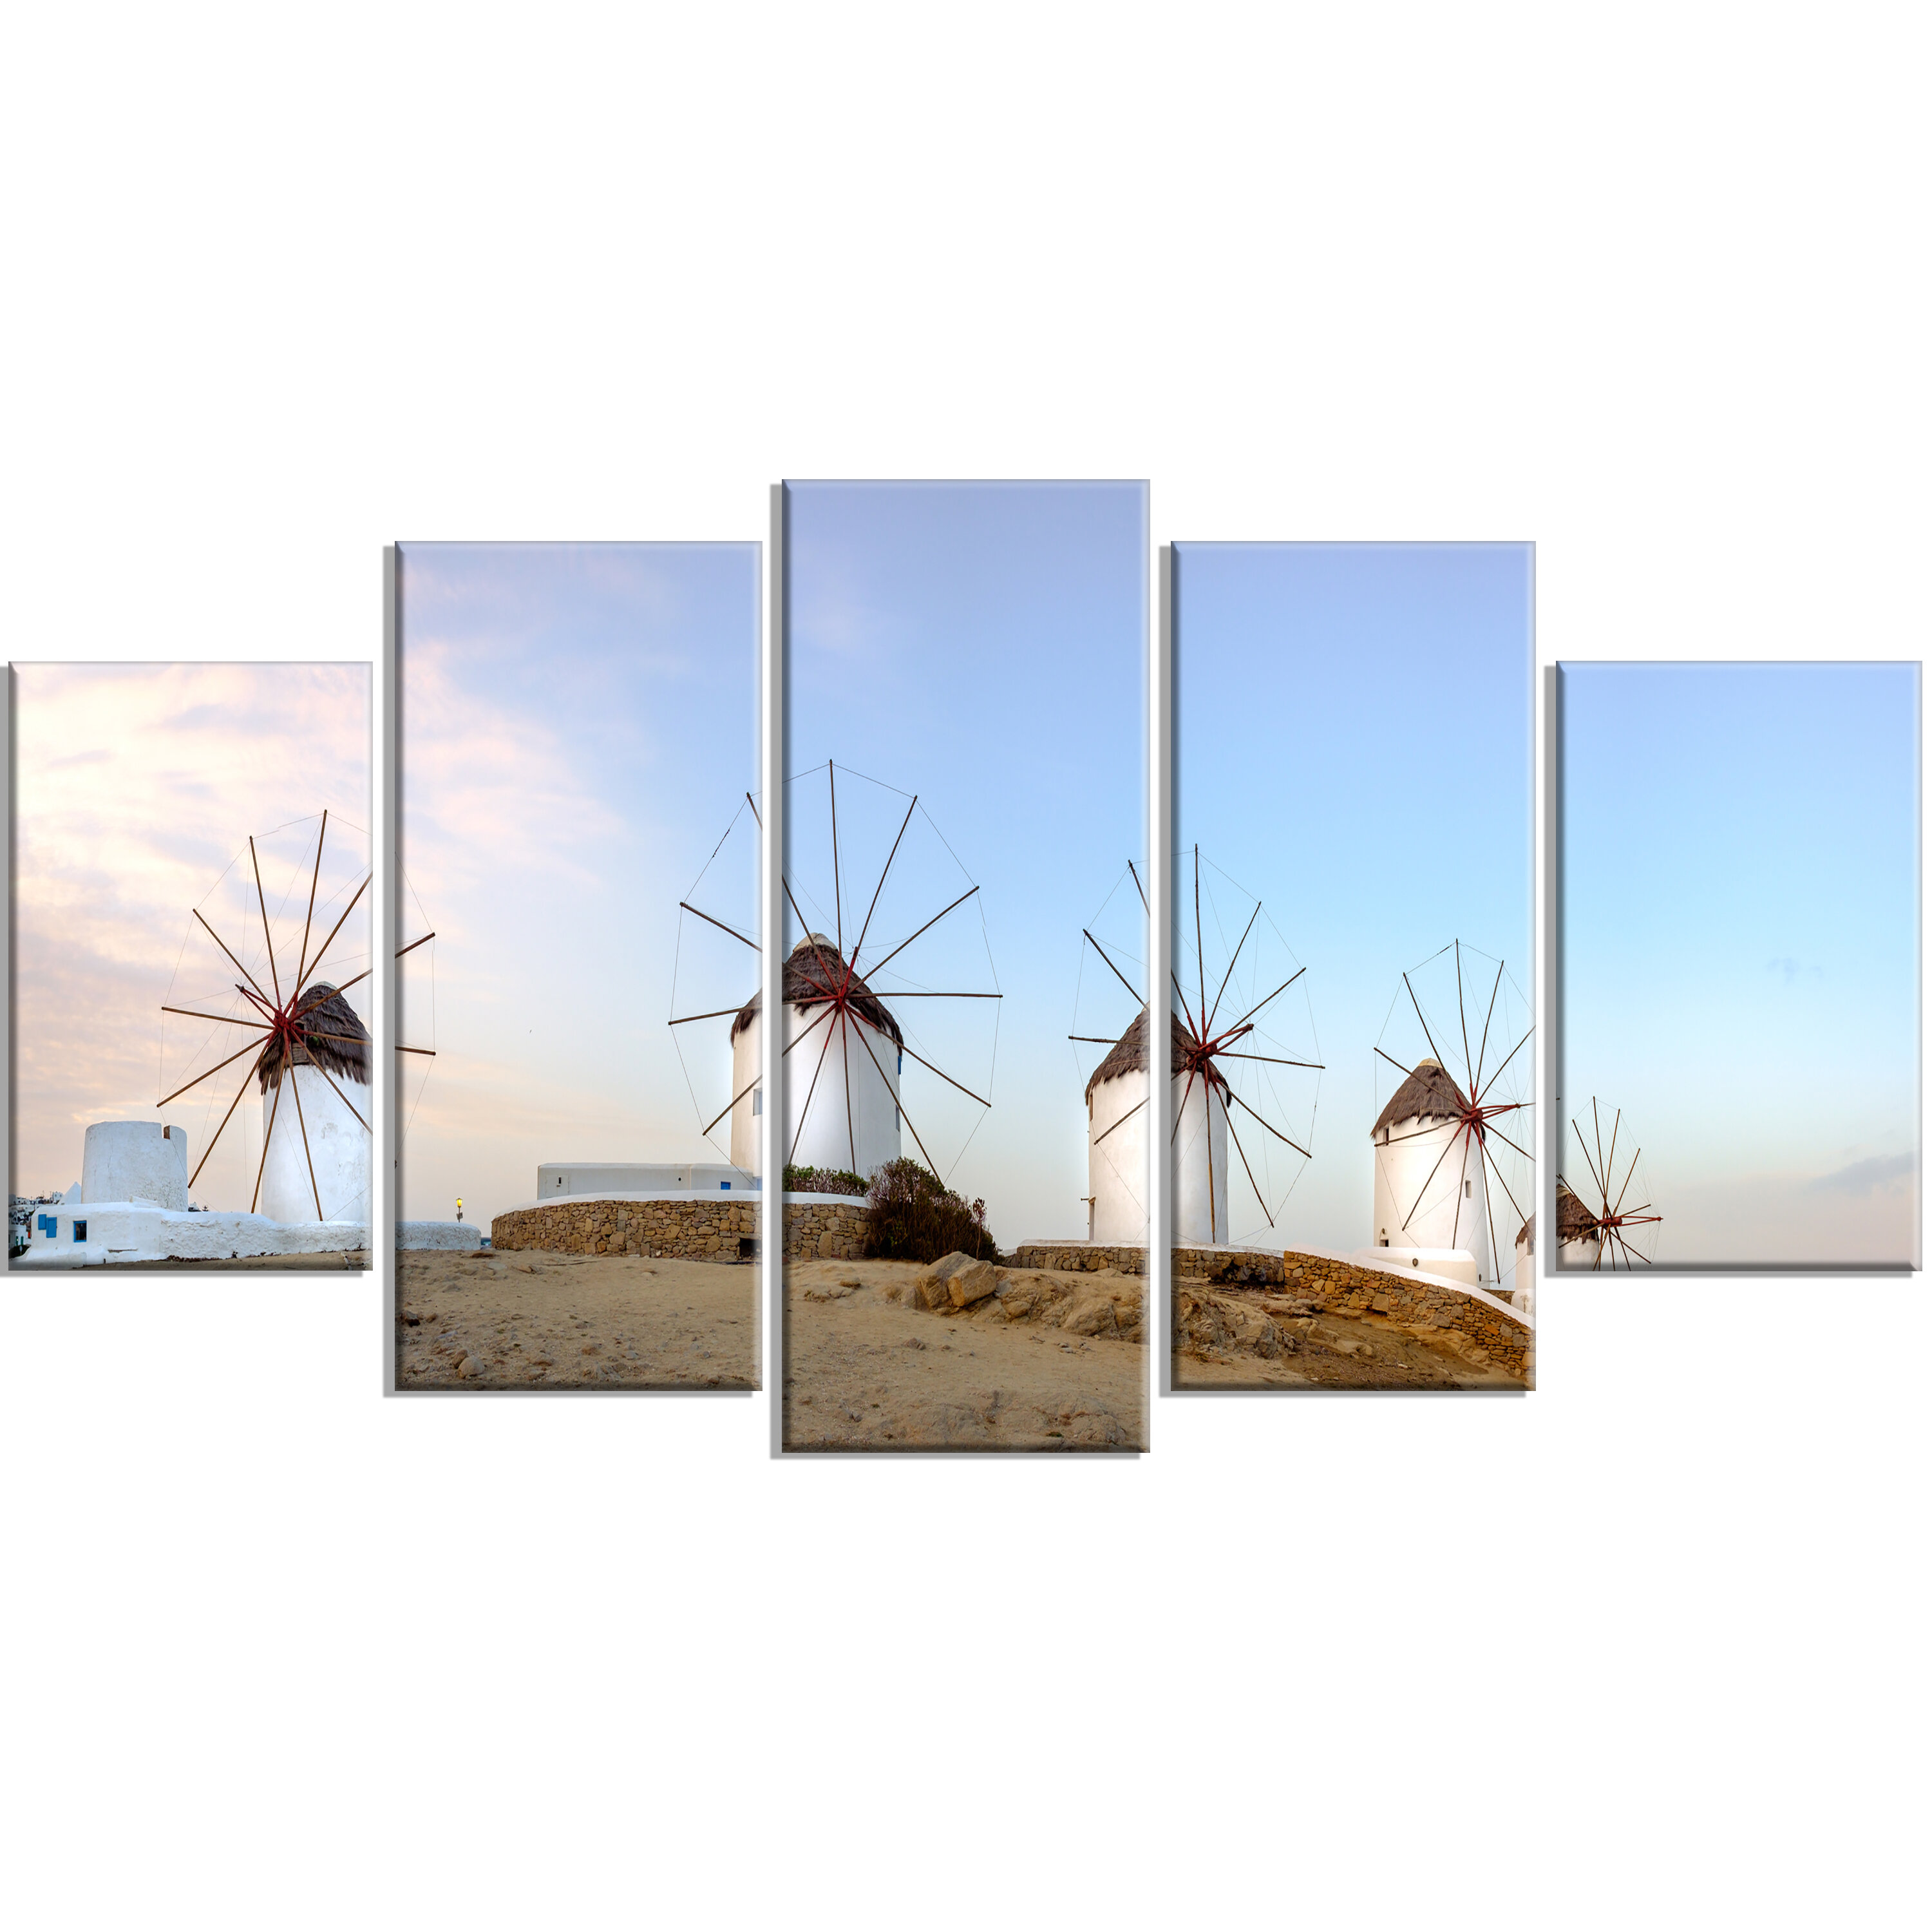 Designart Traditional Greek Windmills Panorama 5 Piece Wall Art On Wrapped Canvas Set Wayfair